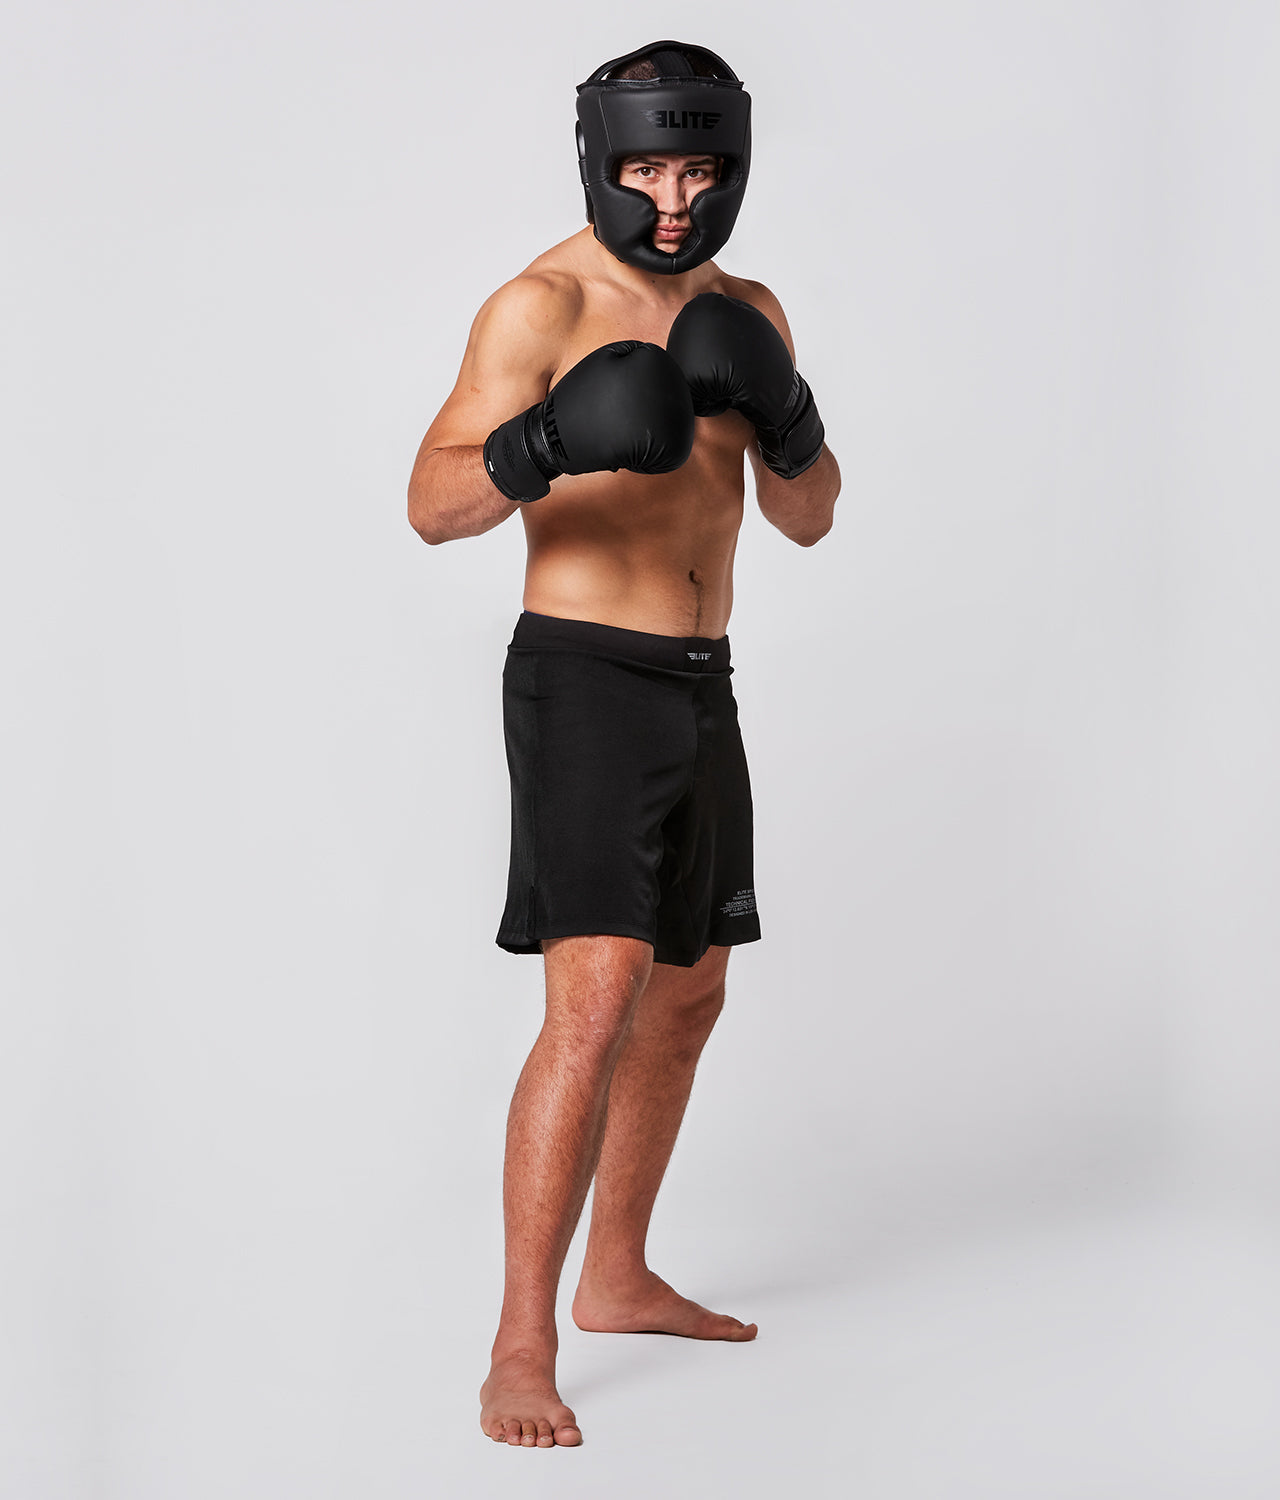 Elite Sports Adults' Essential Black/Black Boxing Headgear